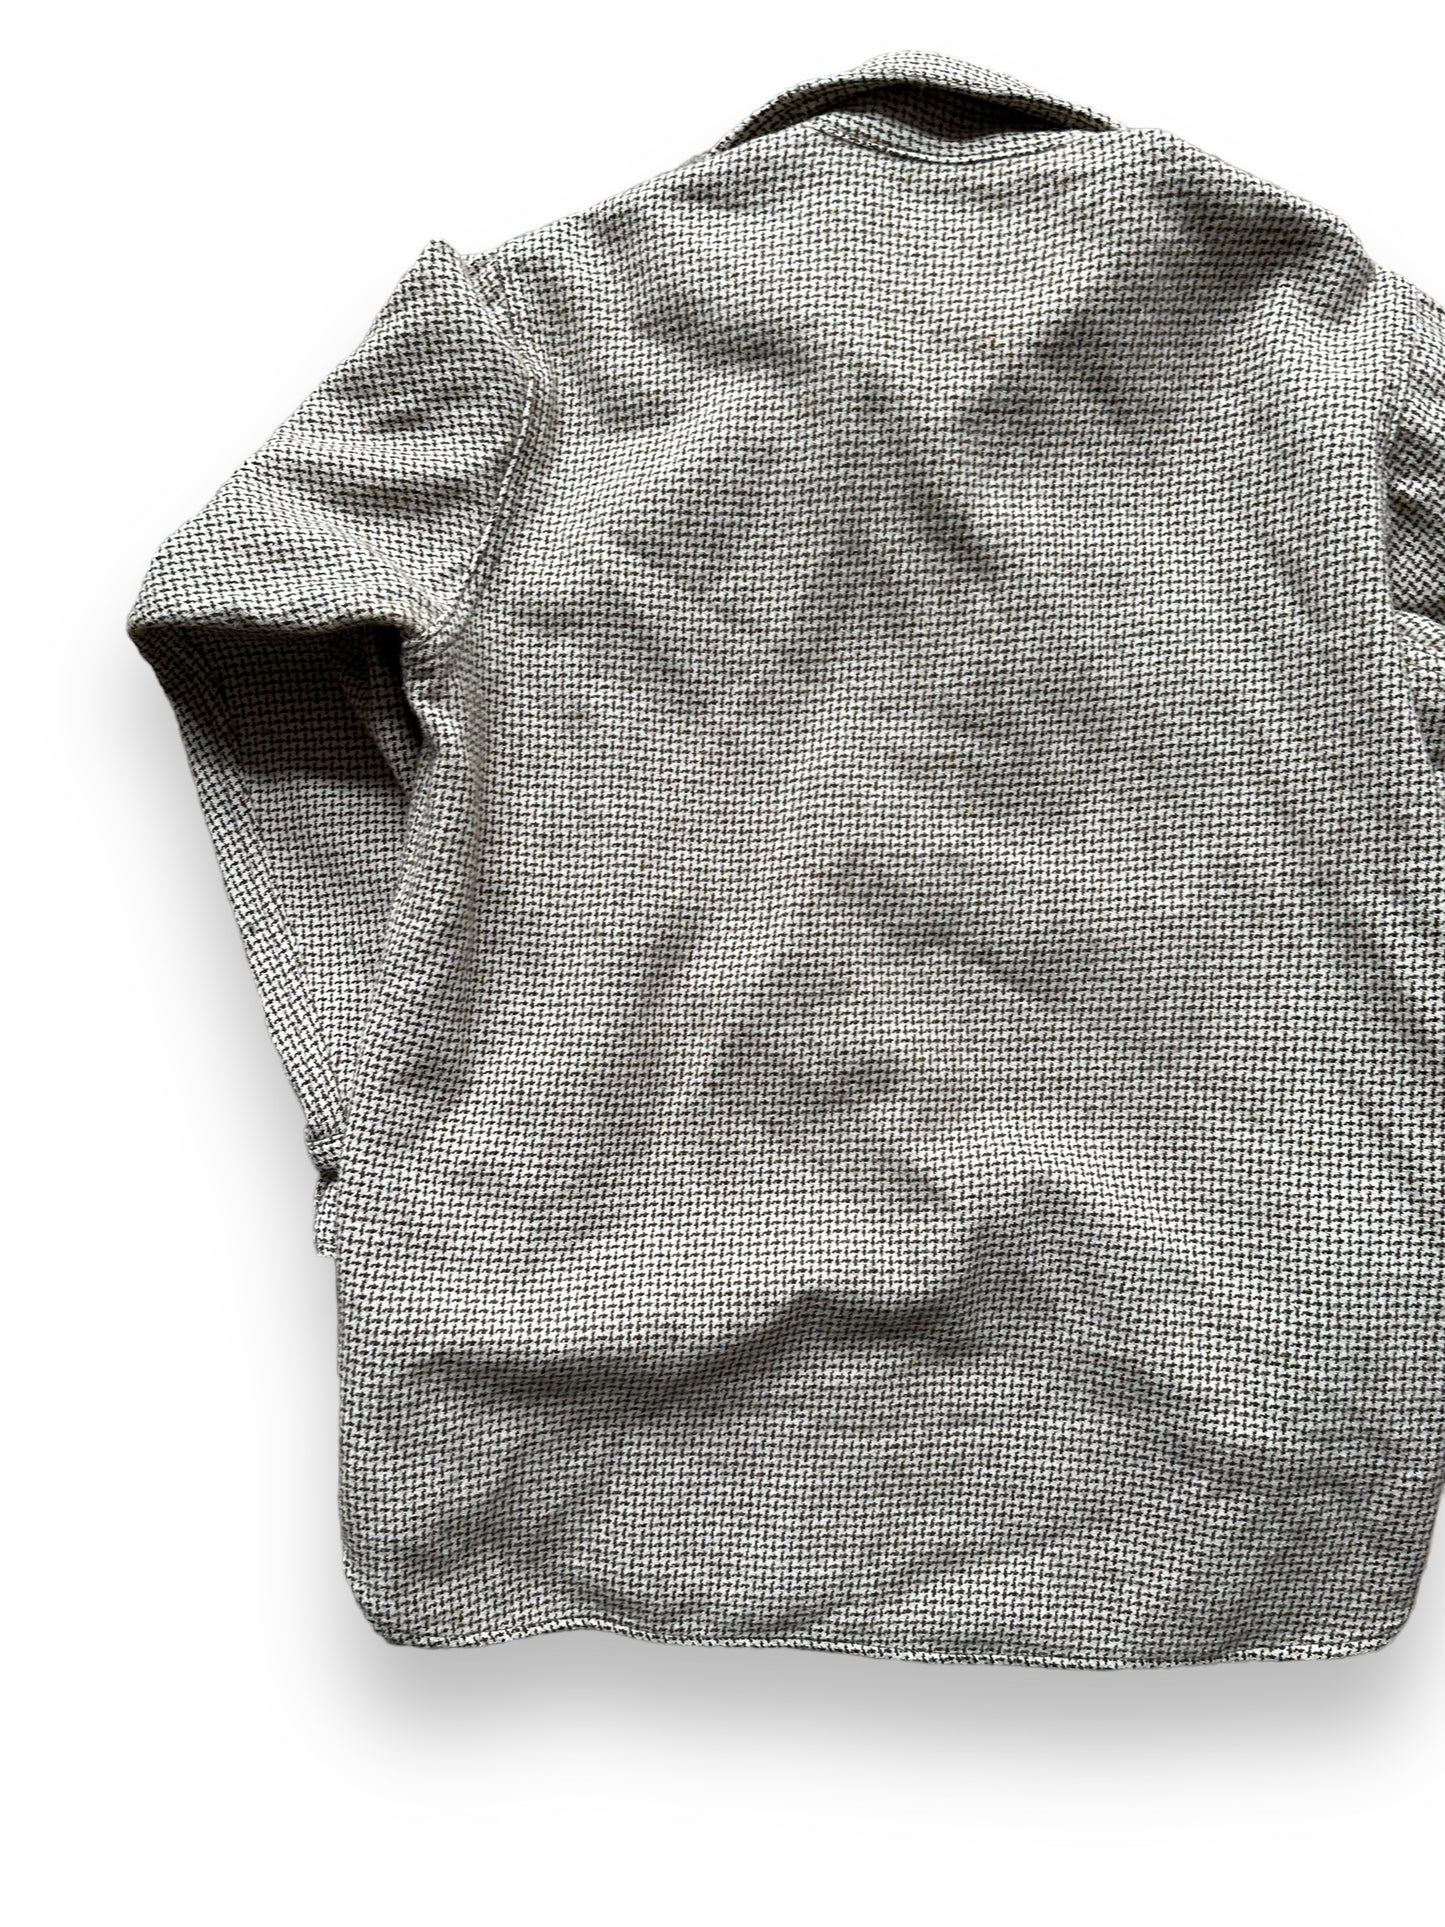 Left Rear View of Vintage Tan Houndstooth Woolrich Shirt Jacket SZ M |  Barn Owl Vintage Goods | Vintage Workwear Seattle